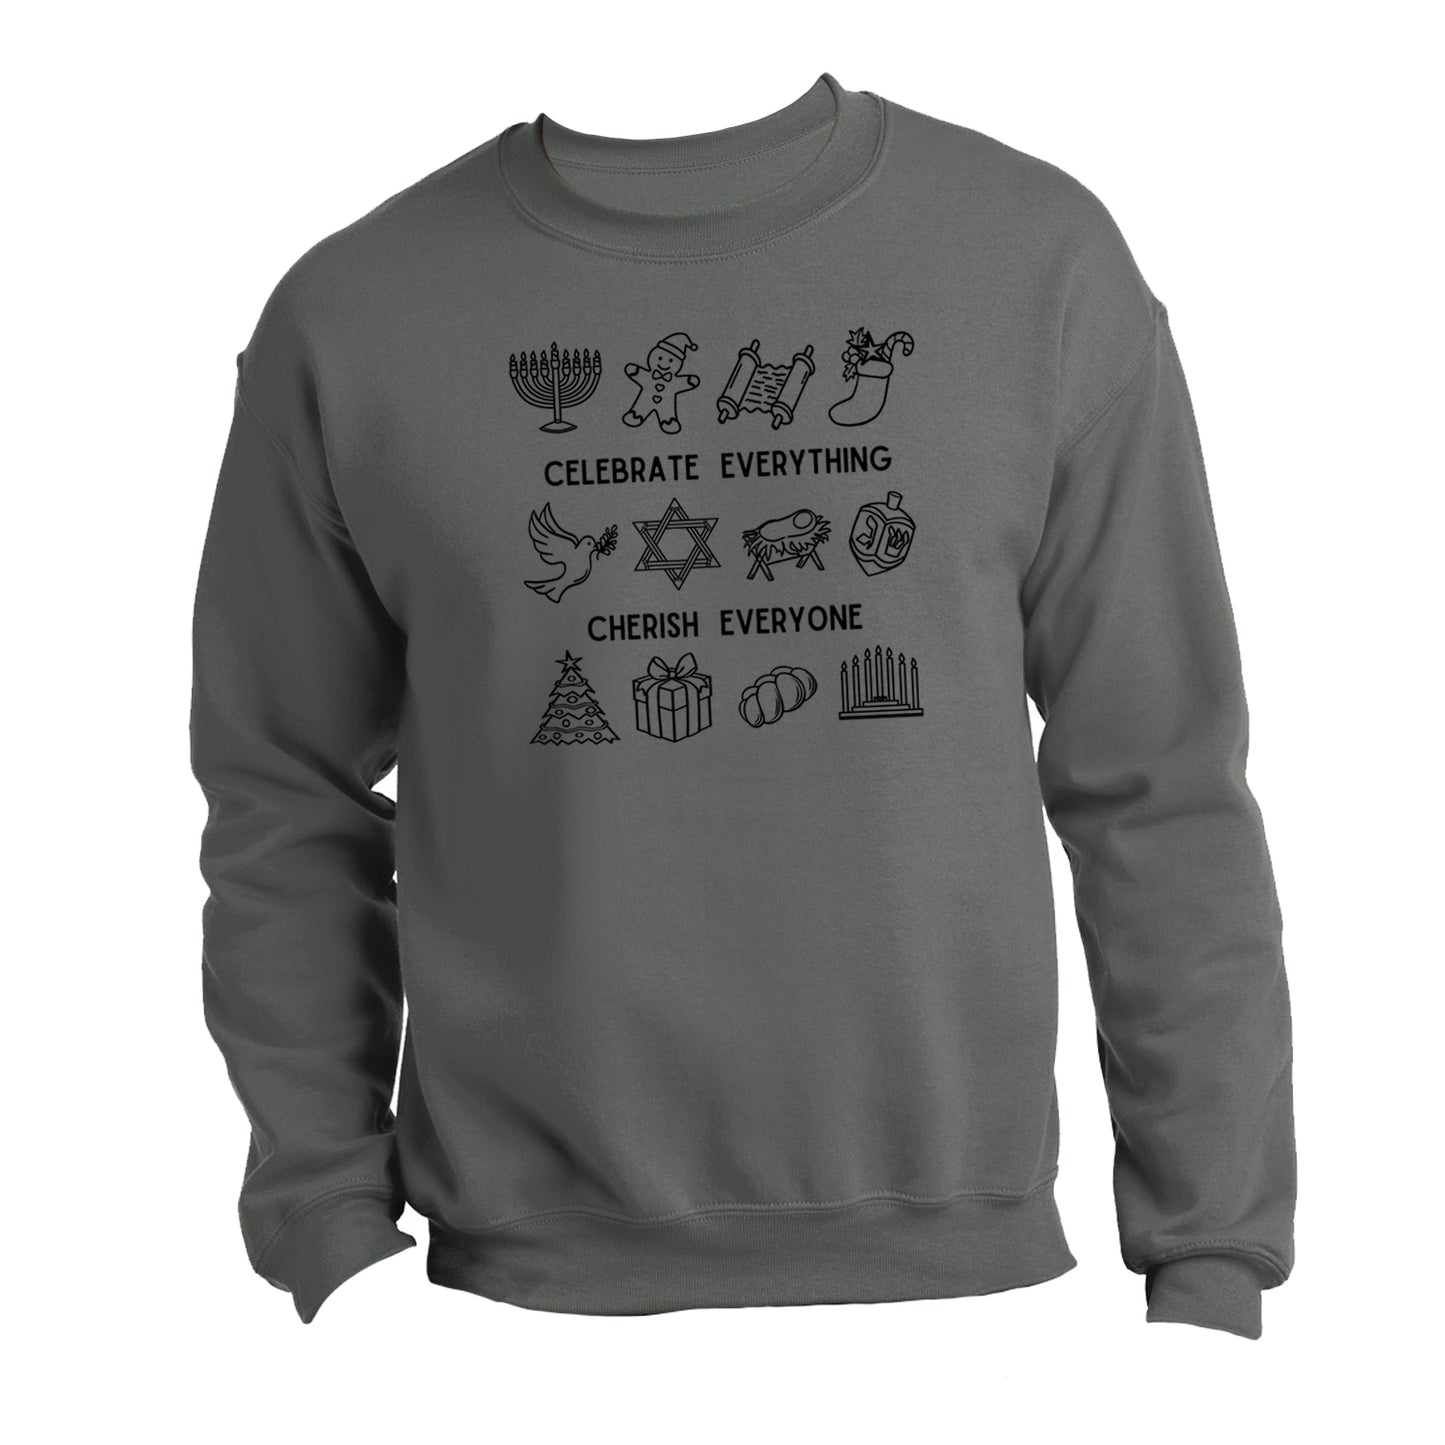 "Celebrate Everything, Cherish Everyone" - Sweatshirt